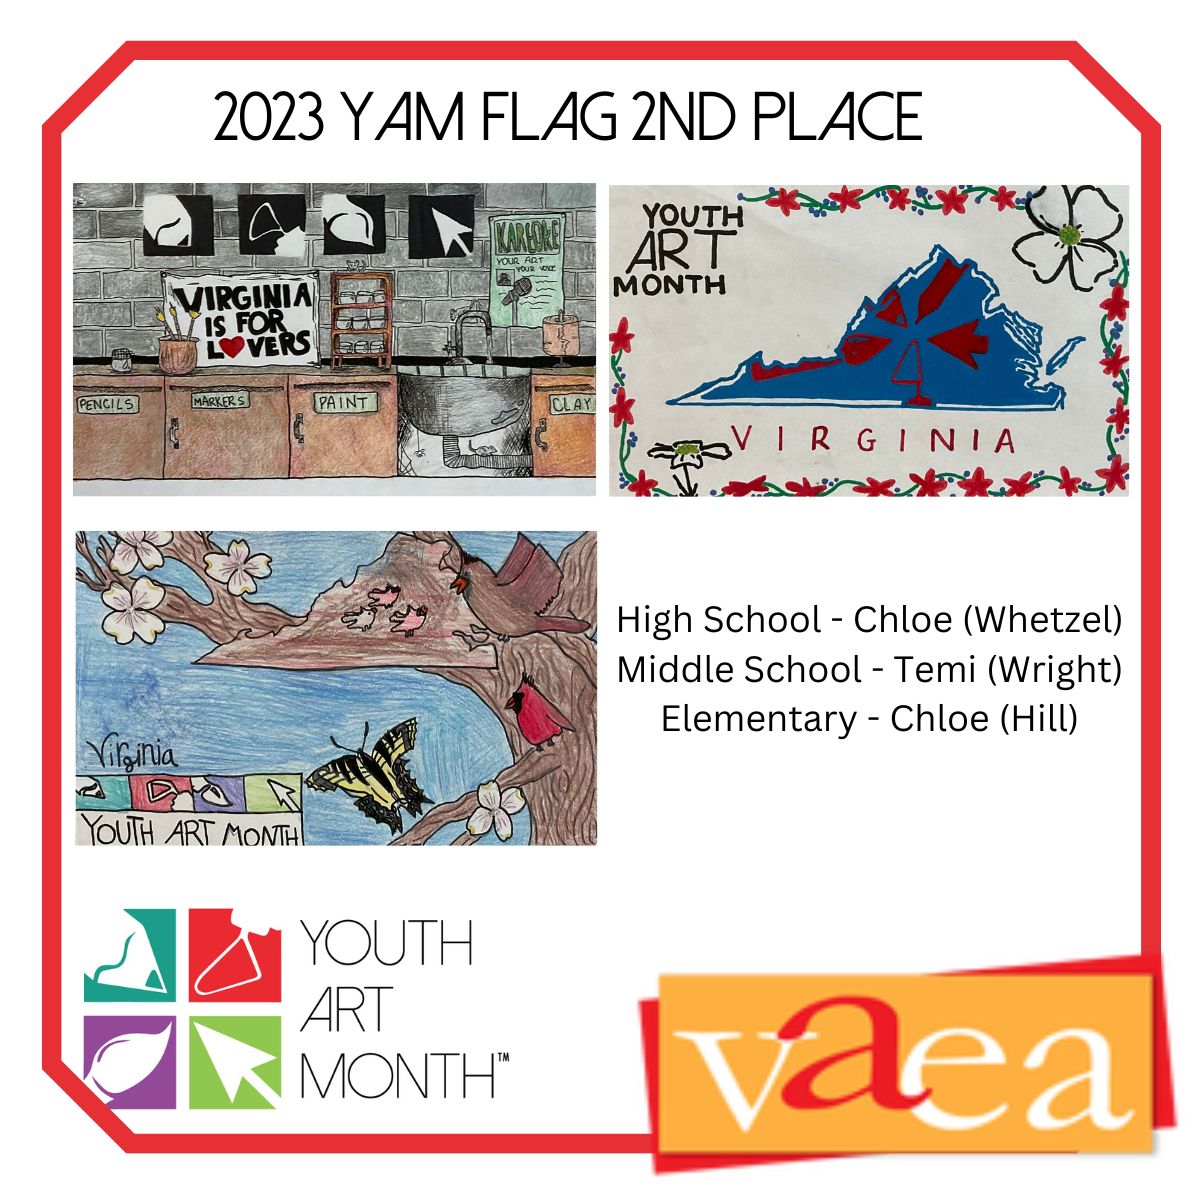 Congratulations - 2023 VA Youth Art Month flag design 2nd place
#vaartedyam23